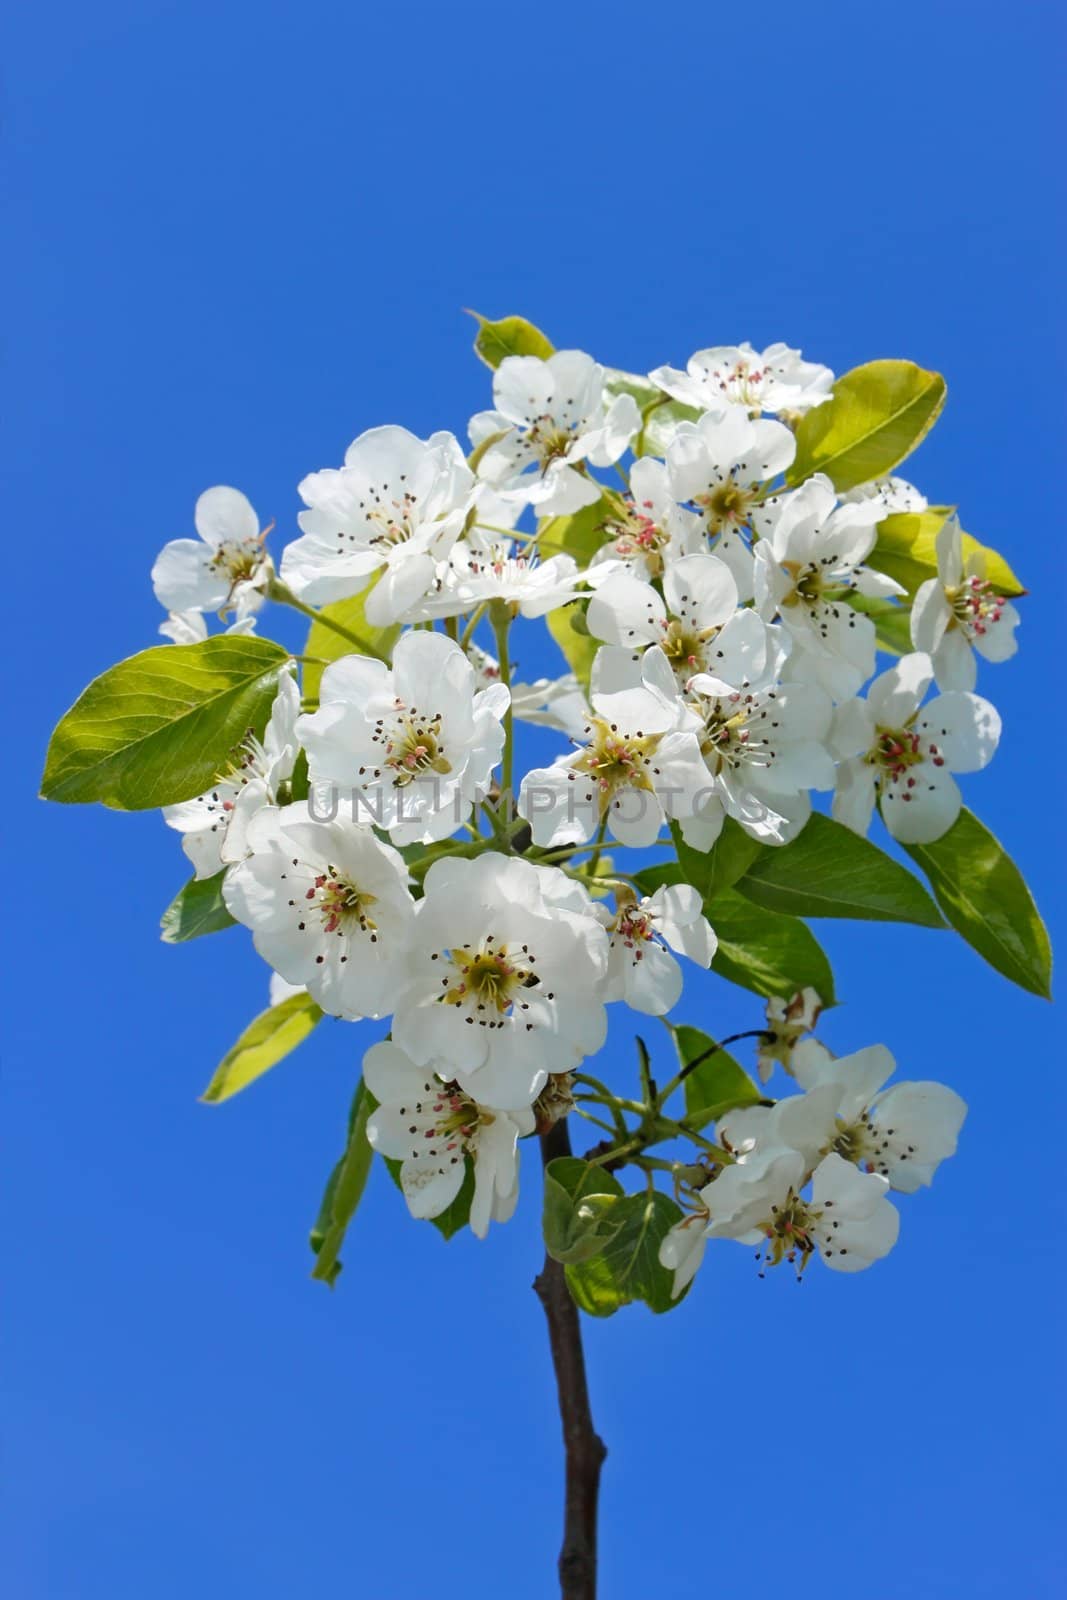 Flowering cherry branch by qiiip